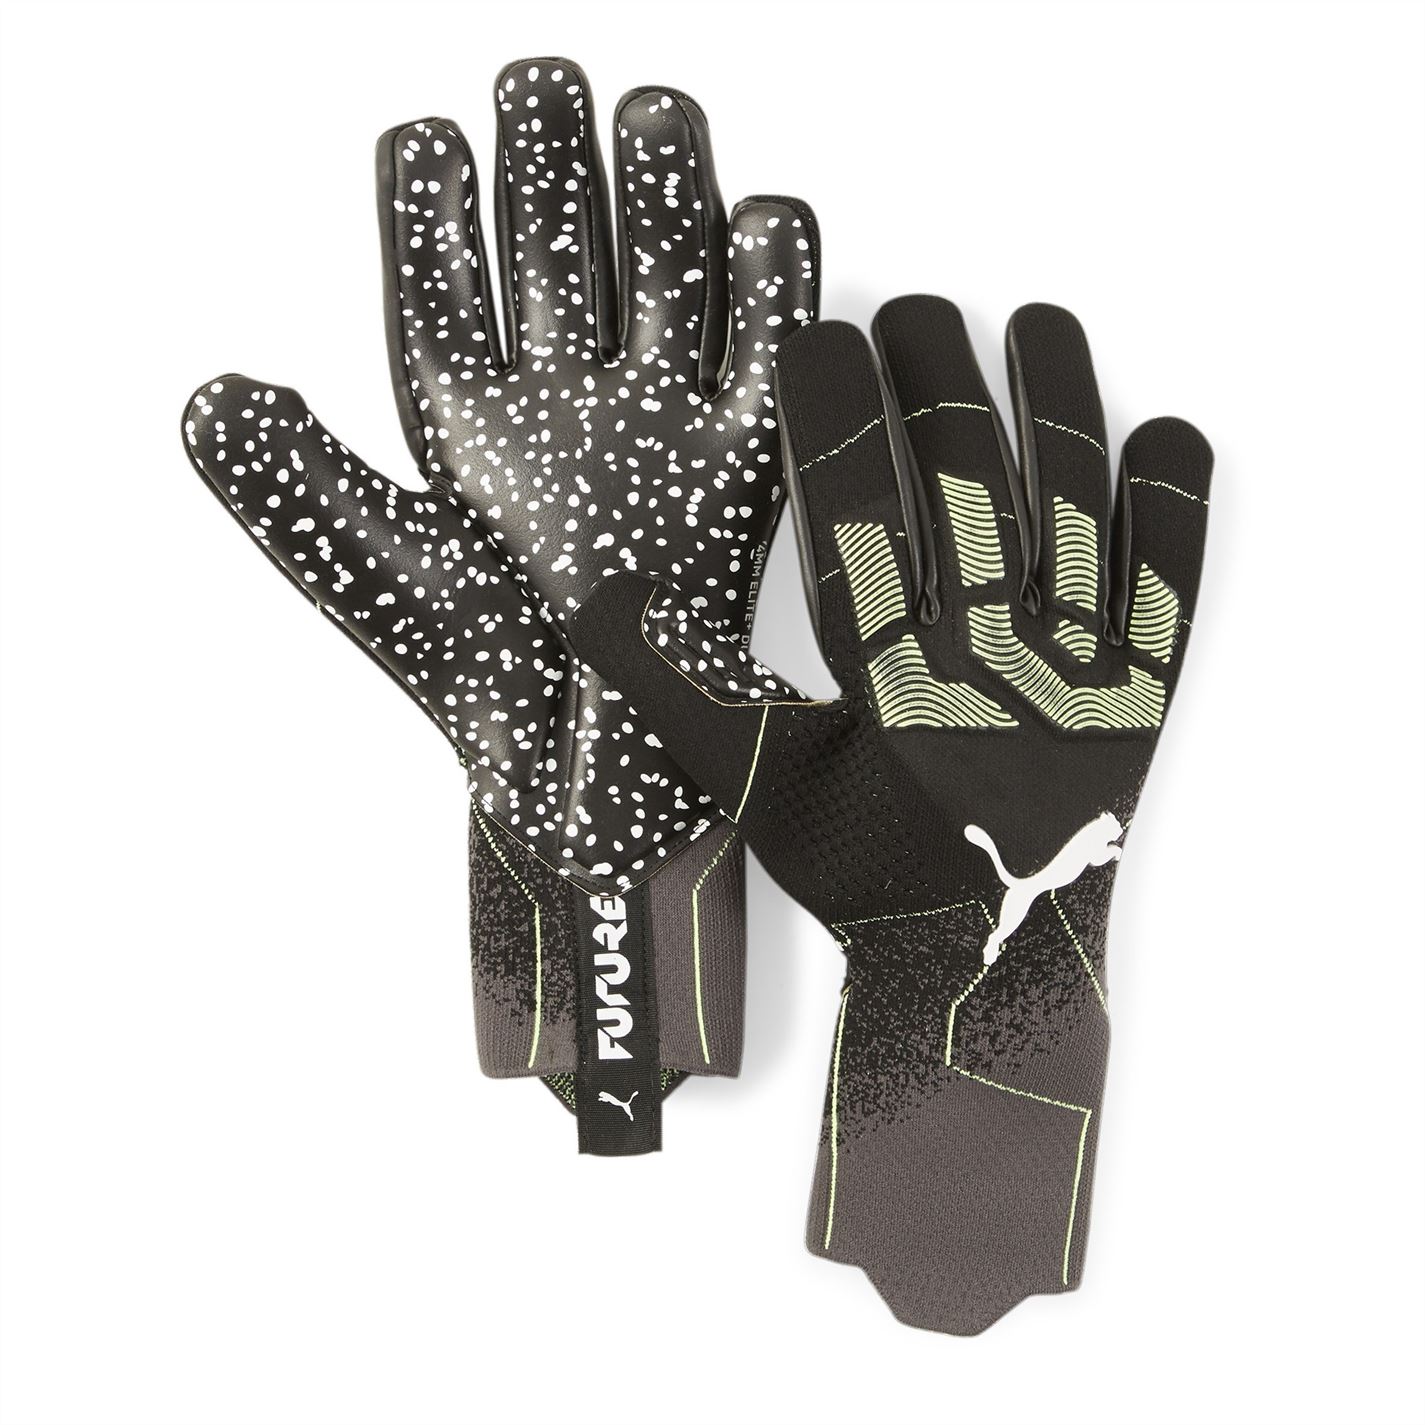 Puma Mens Z Grip 1 Gloves Durable Training Equipment eBay